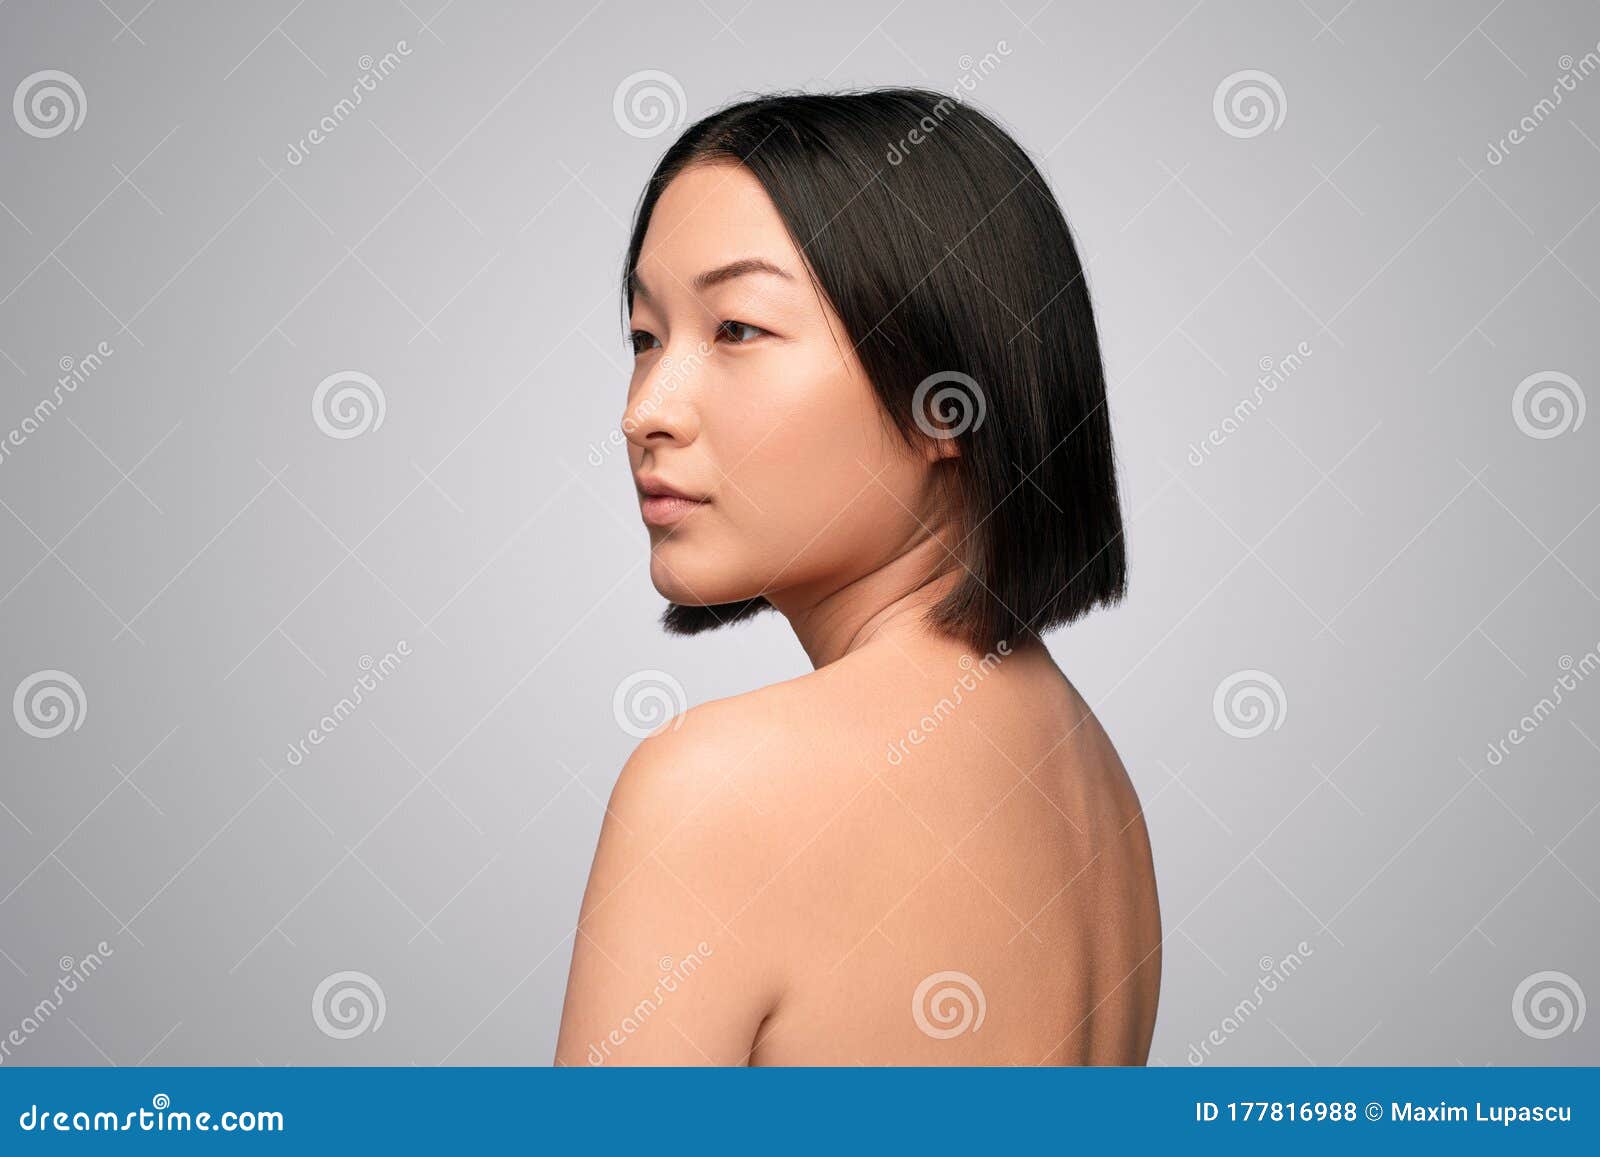 Naked Asian Females